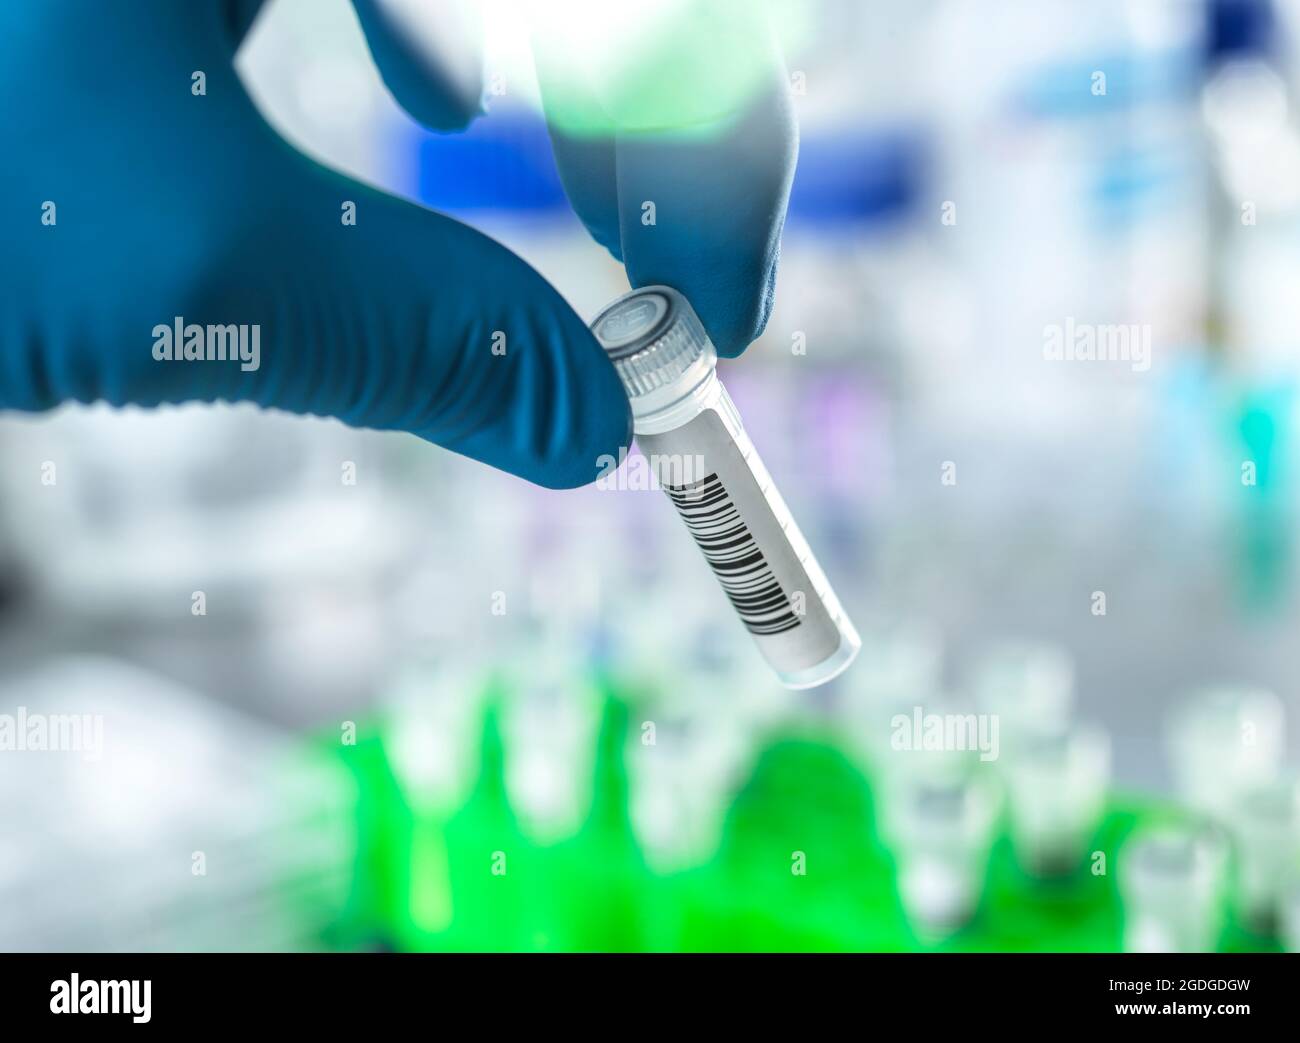 Scientist preparing DNA samples for testing in the lab. Stock Photo